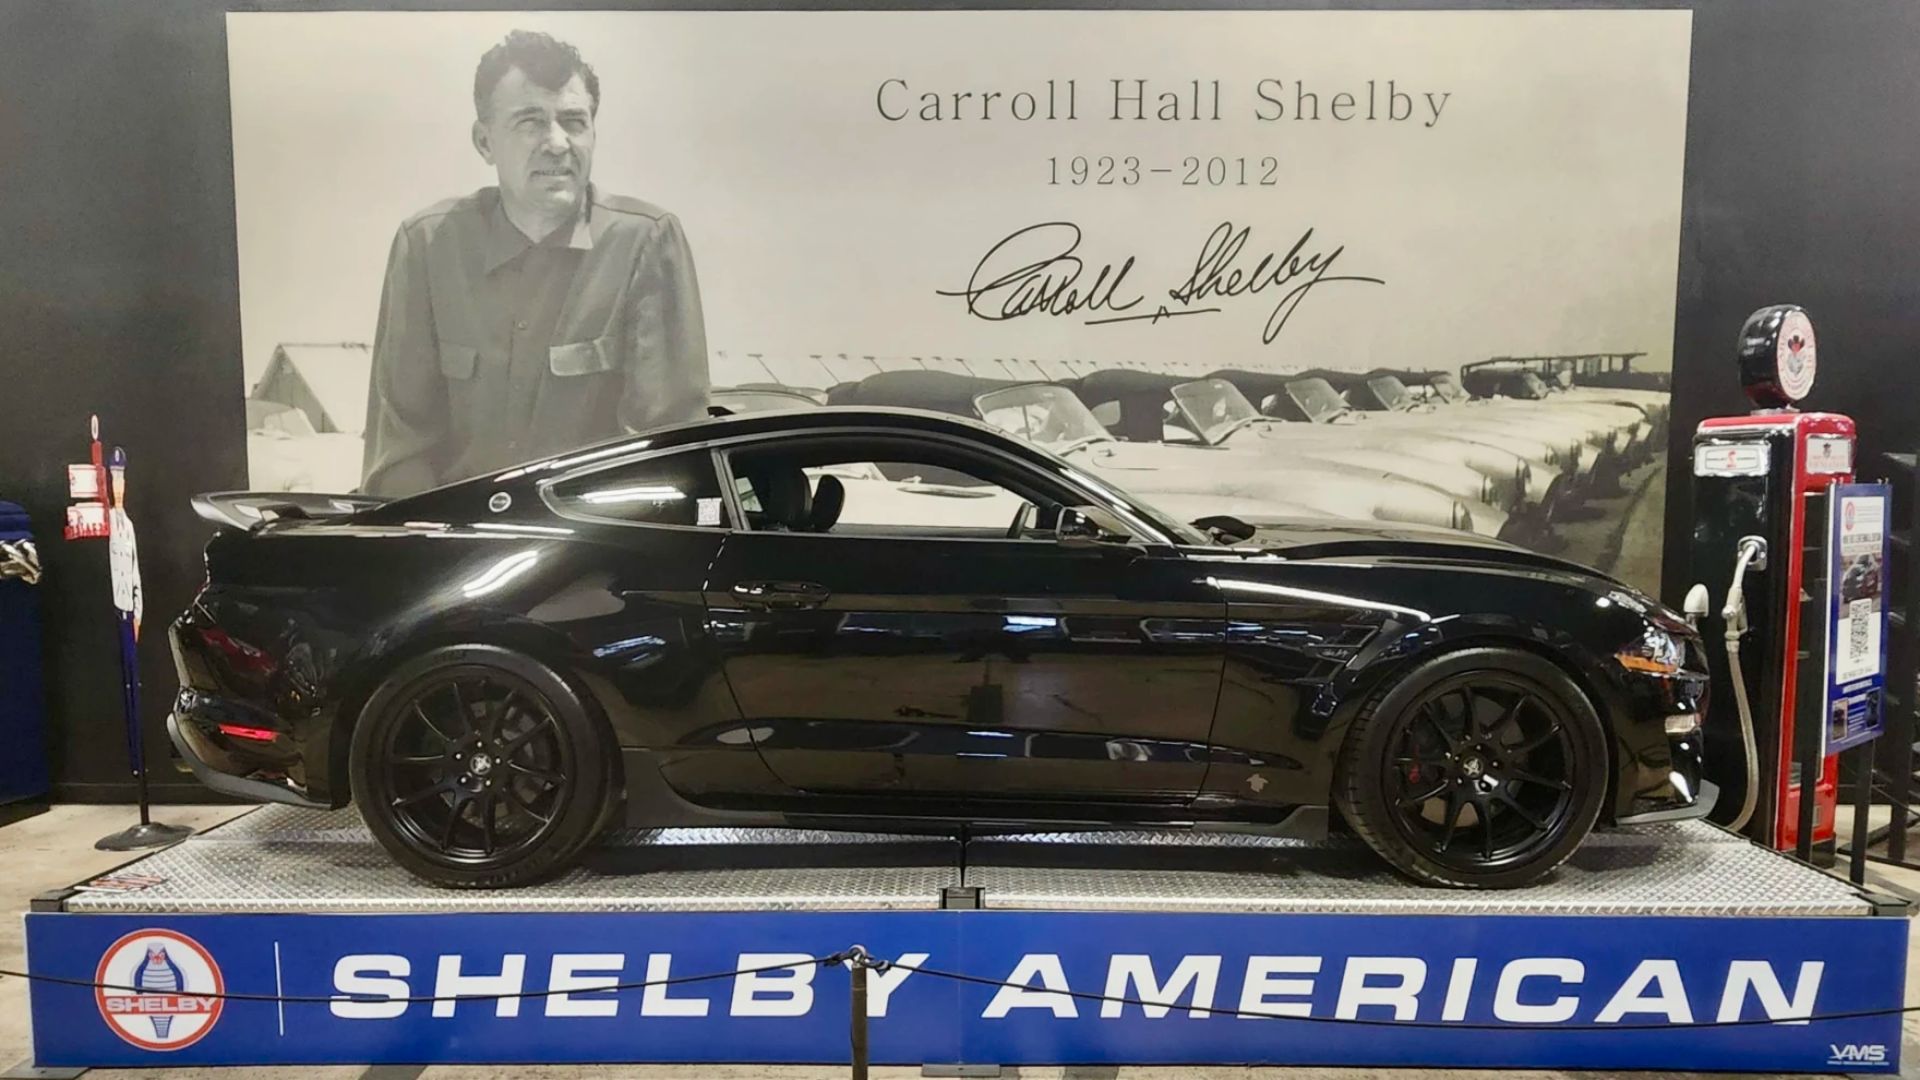 Carroll Shelby Centennial Edition Mustang